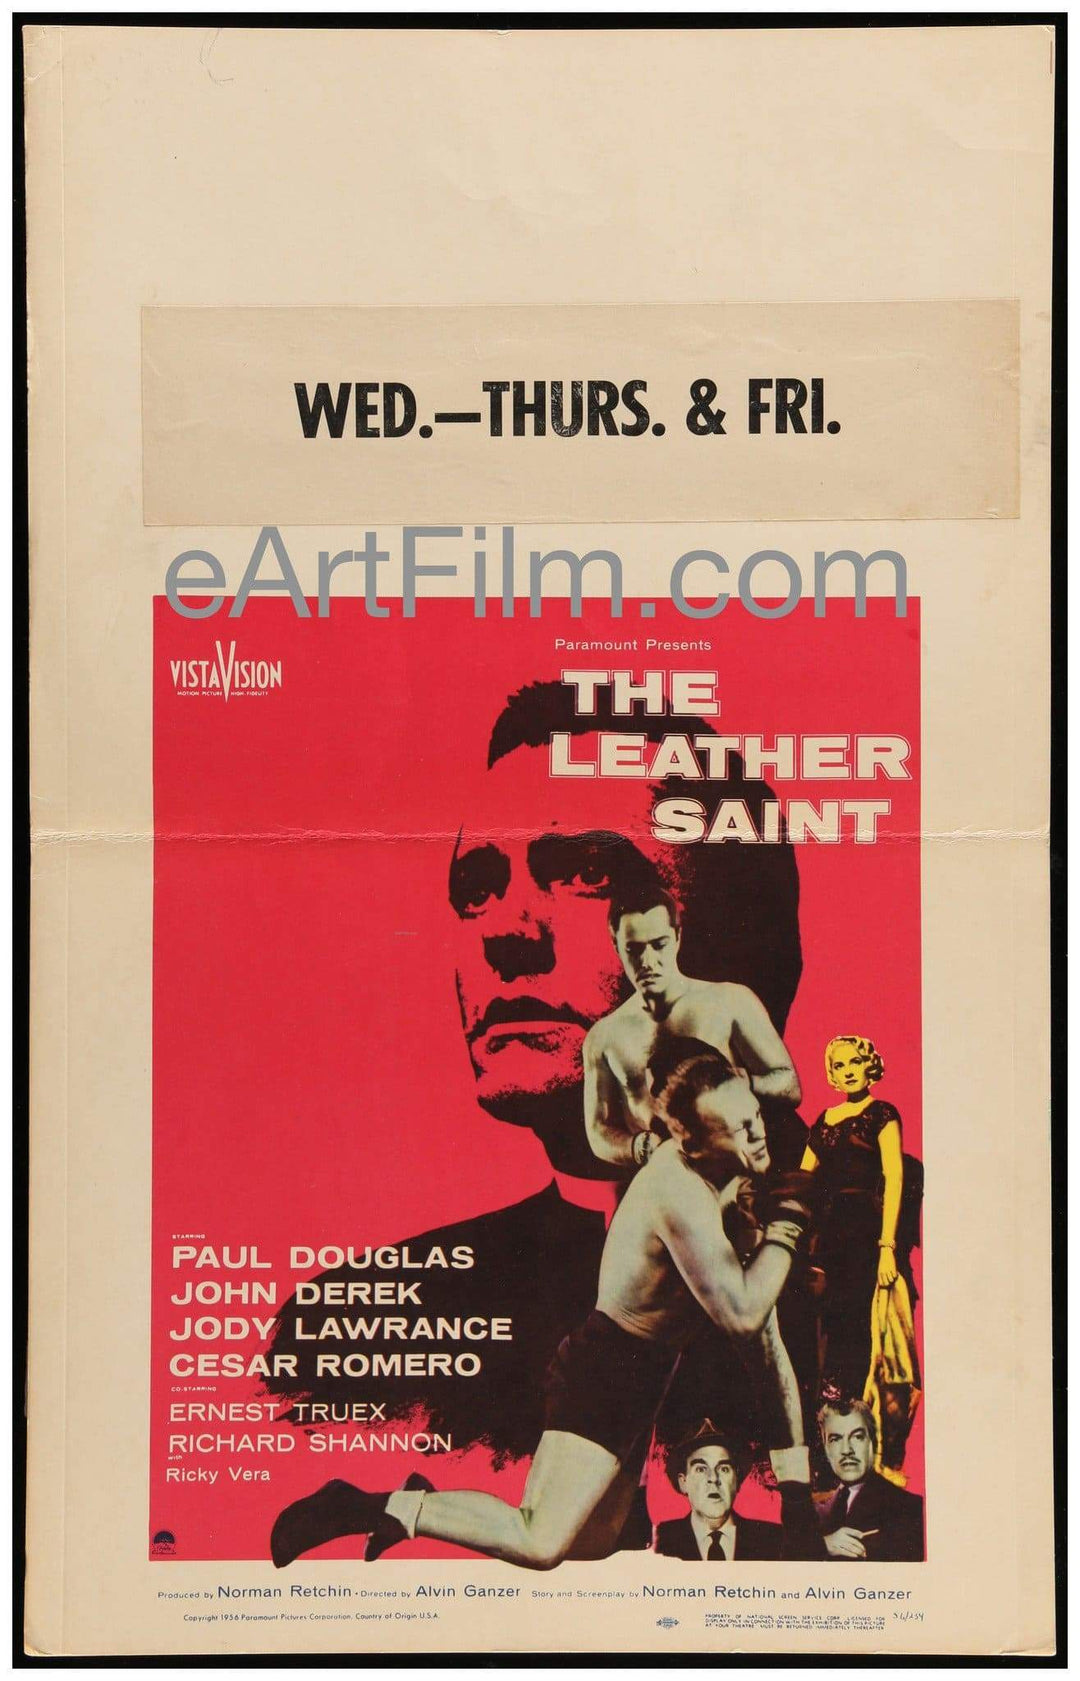 eArtFilm.com U.S Window Card (14"x22") Leather Saint 1956 14x22 Original U.S Window Card